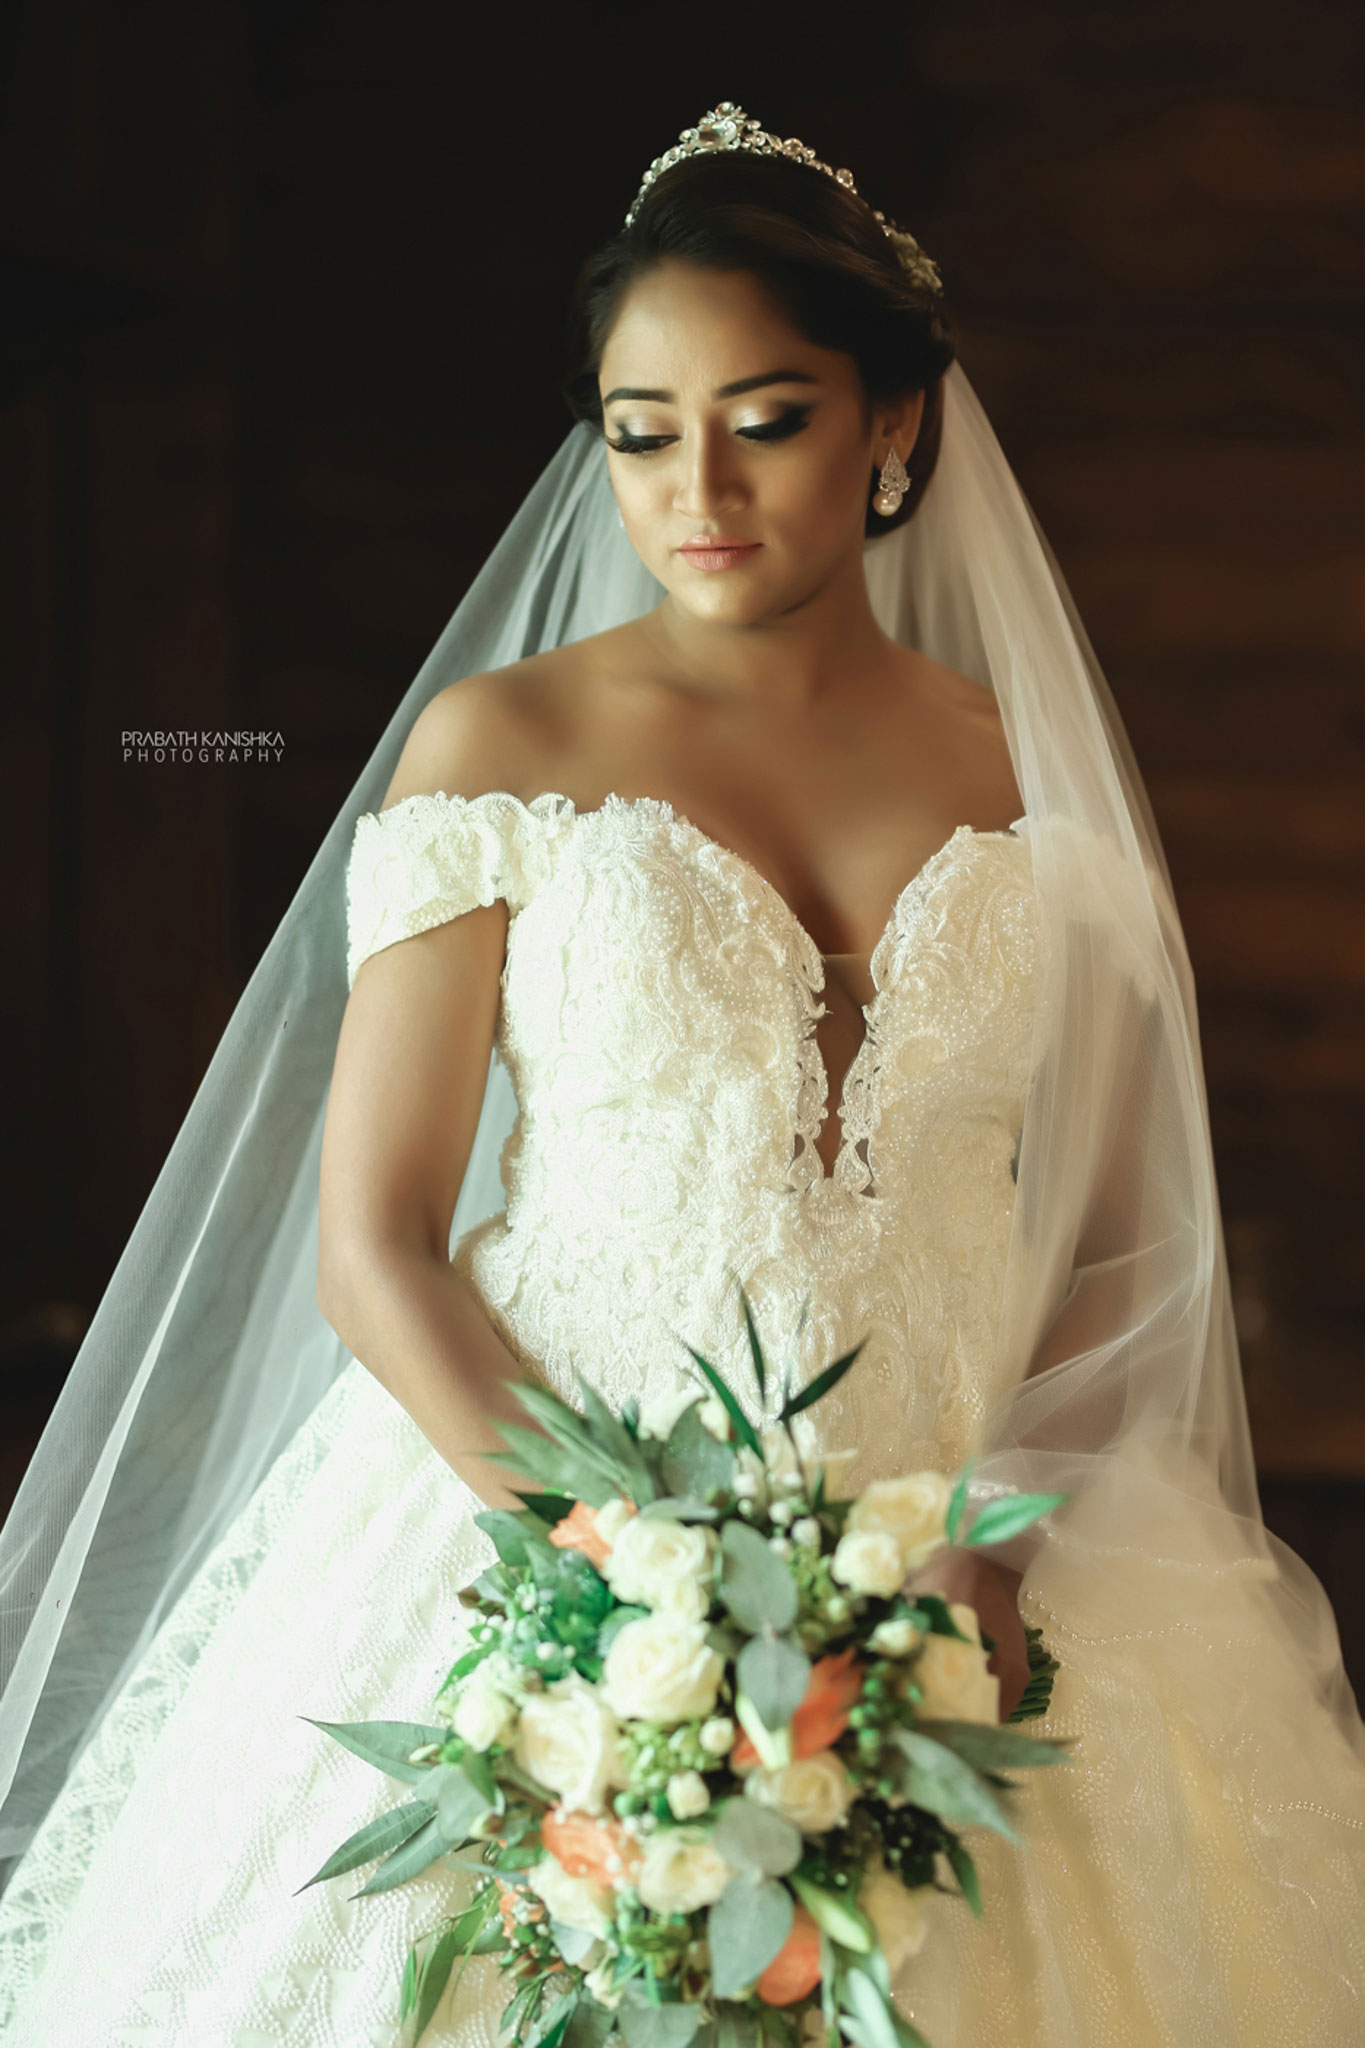 Danni & Surith - Prabath Kanishka Wedding Photography